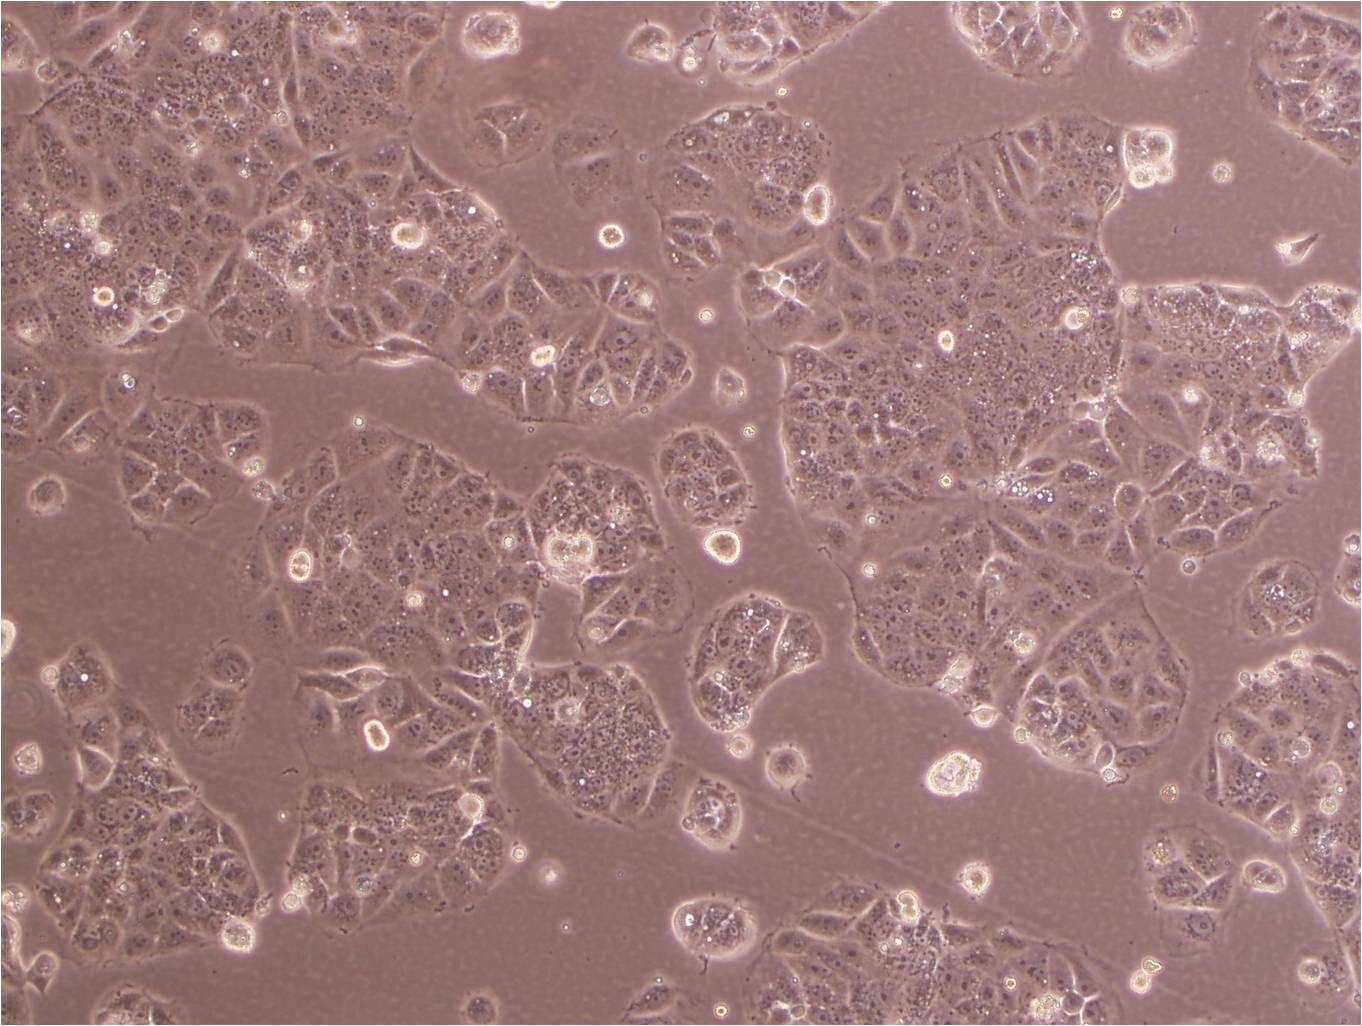 HCCLM6 cell line人肝癌细胞系